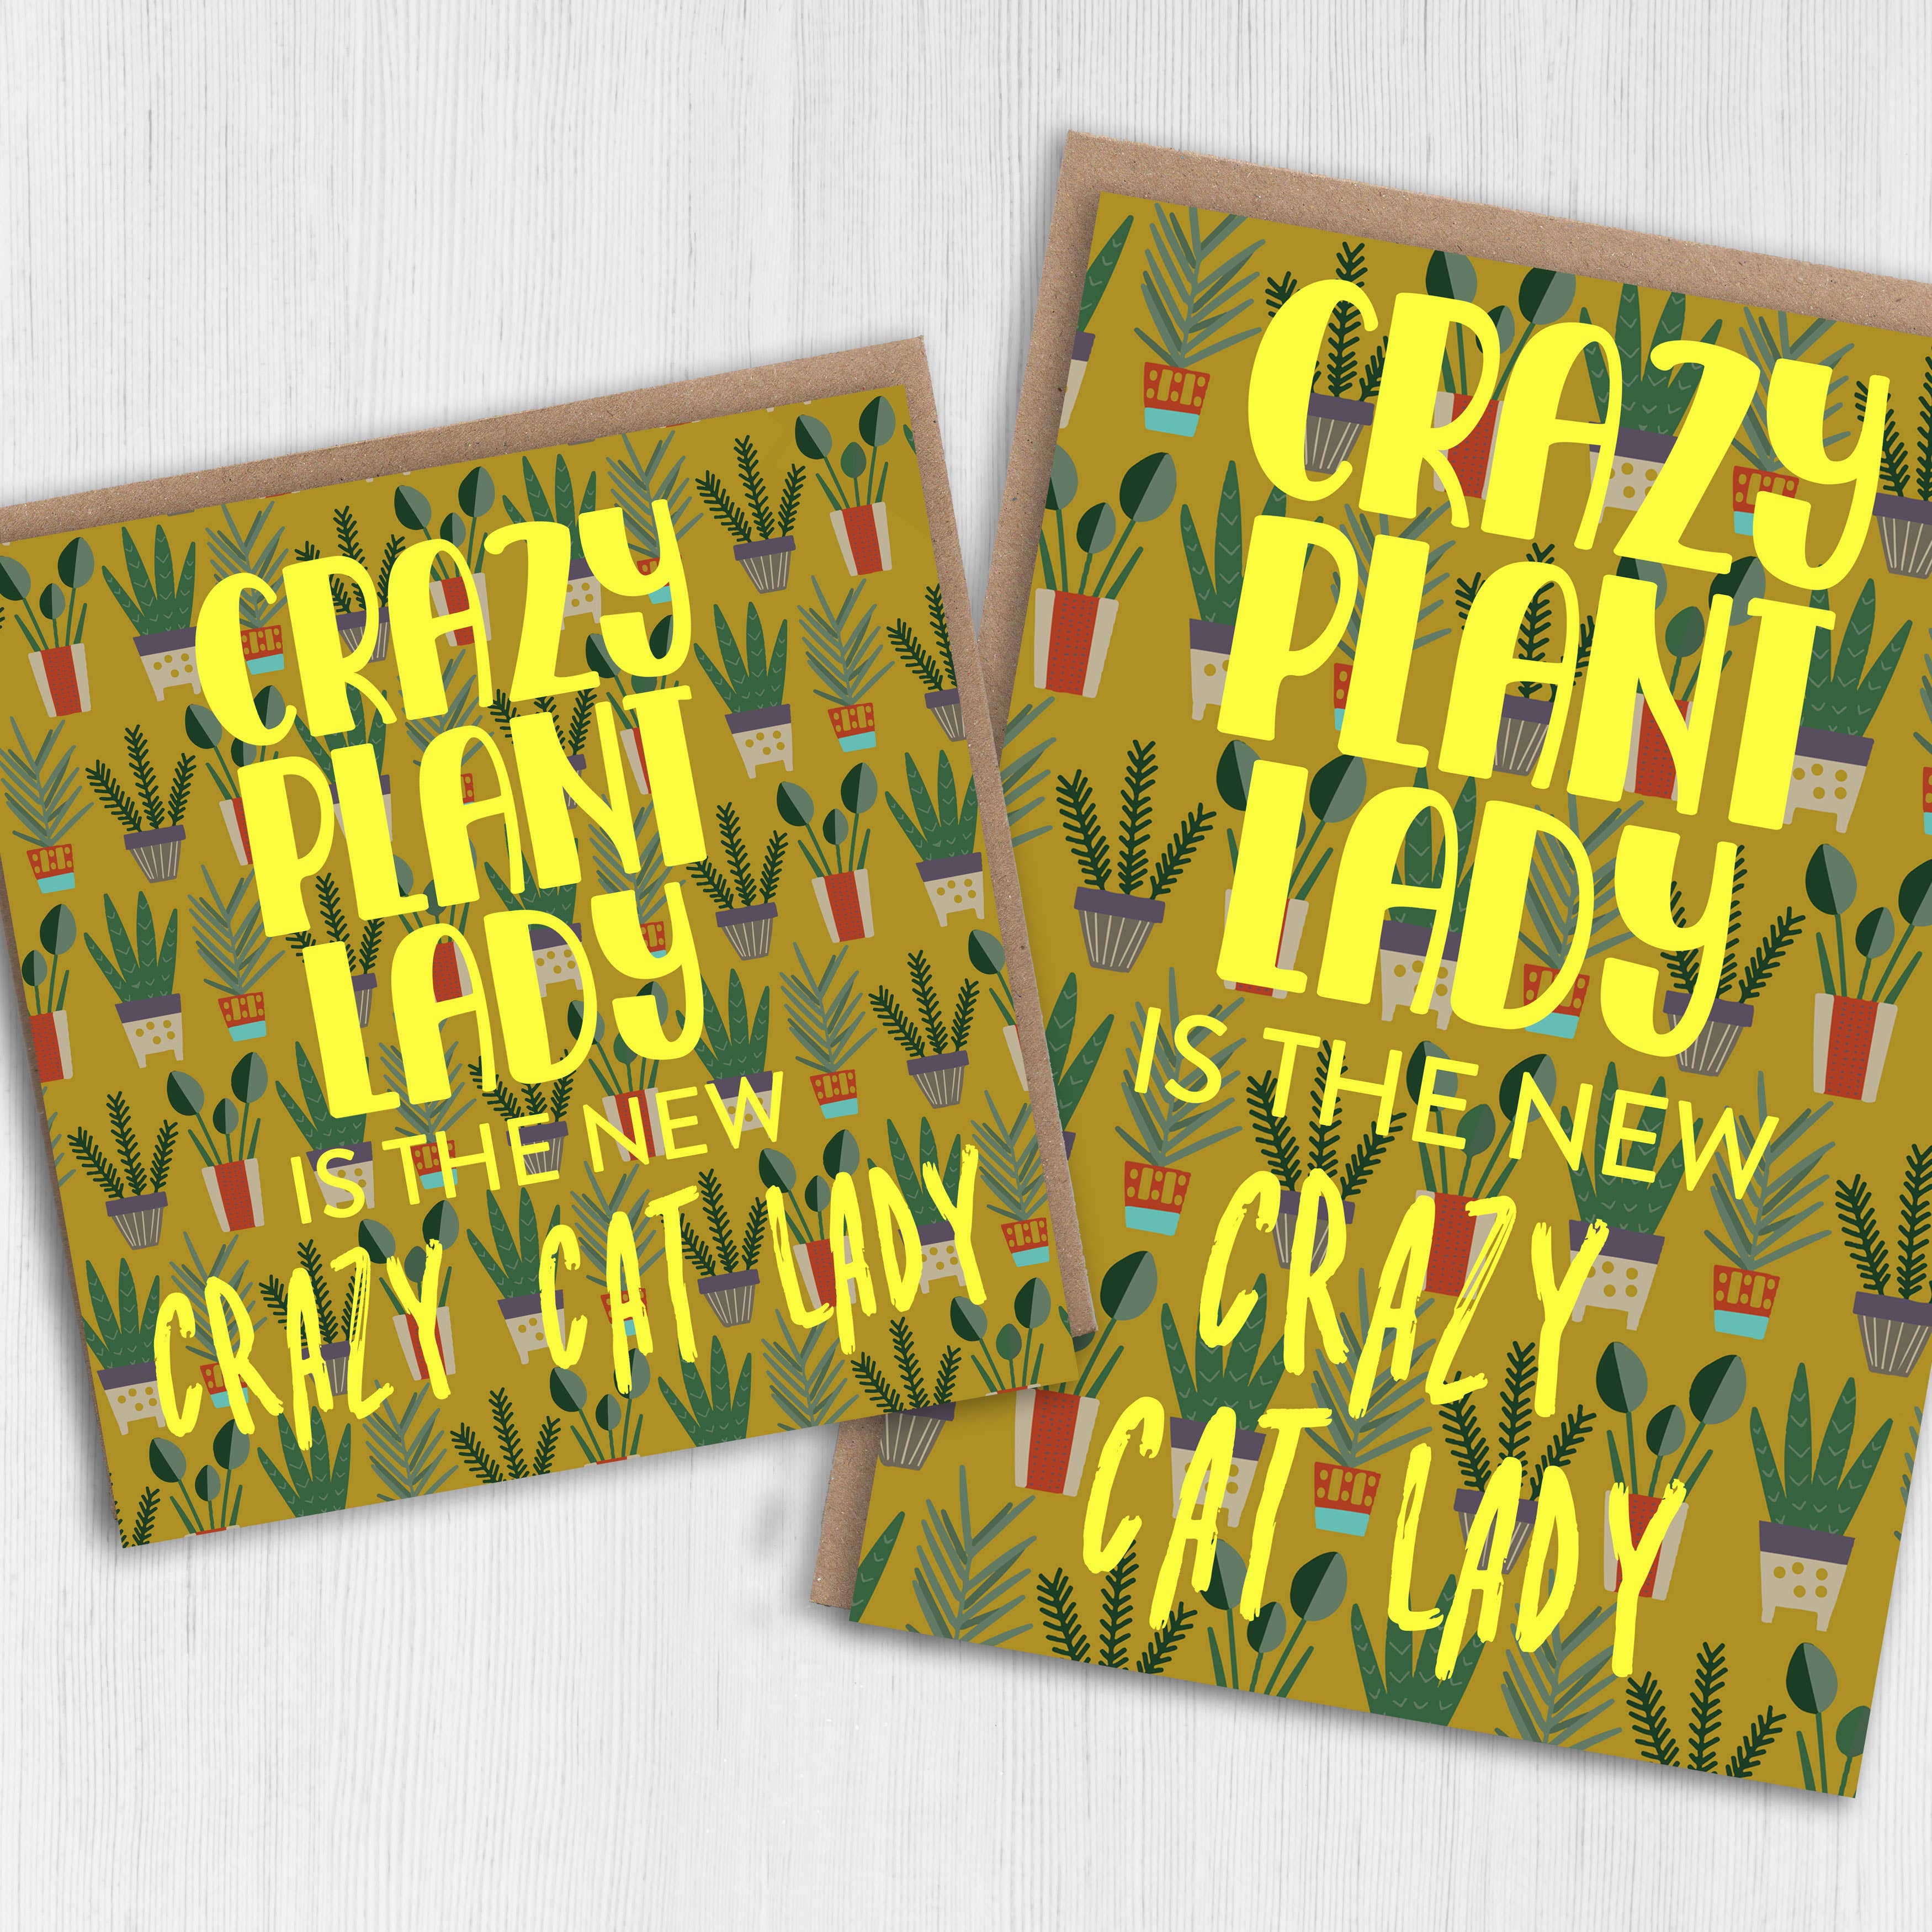 Birthday card: Crazy plant lady